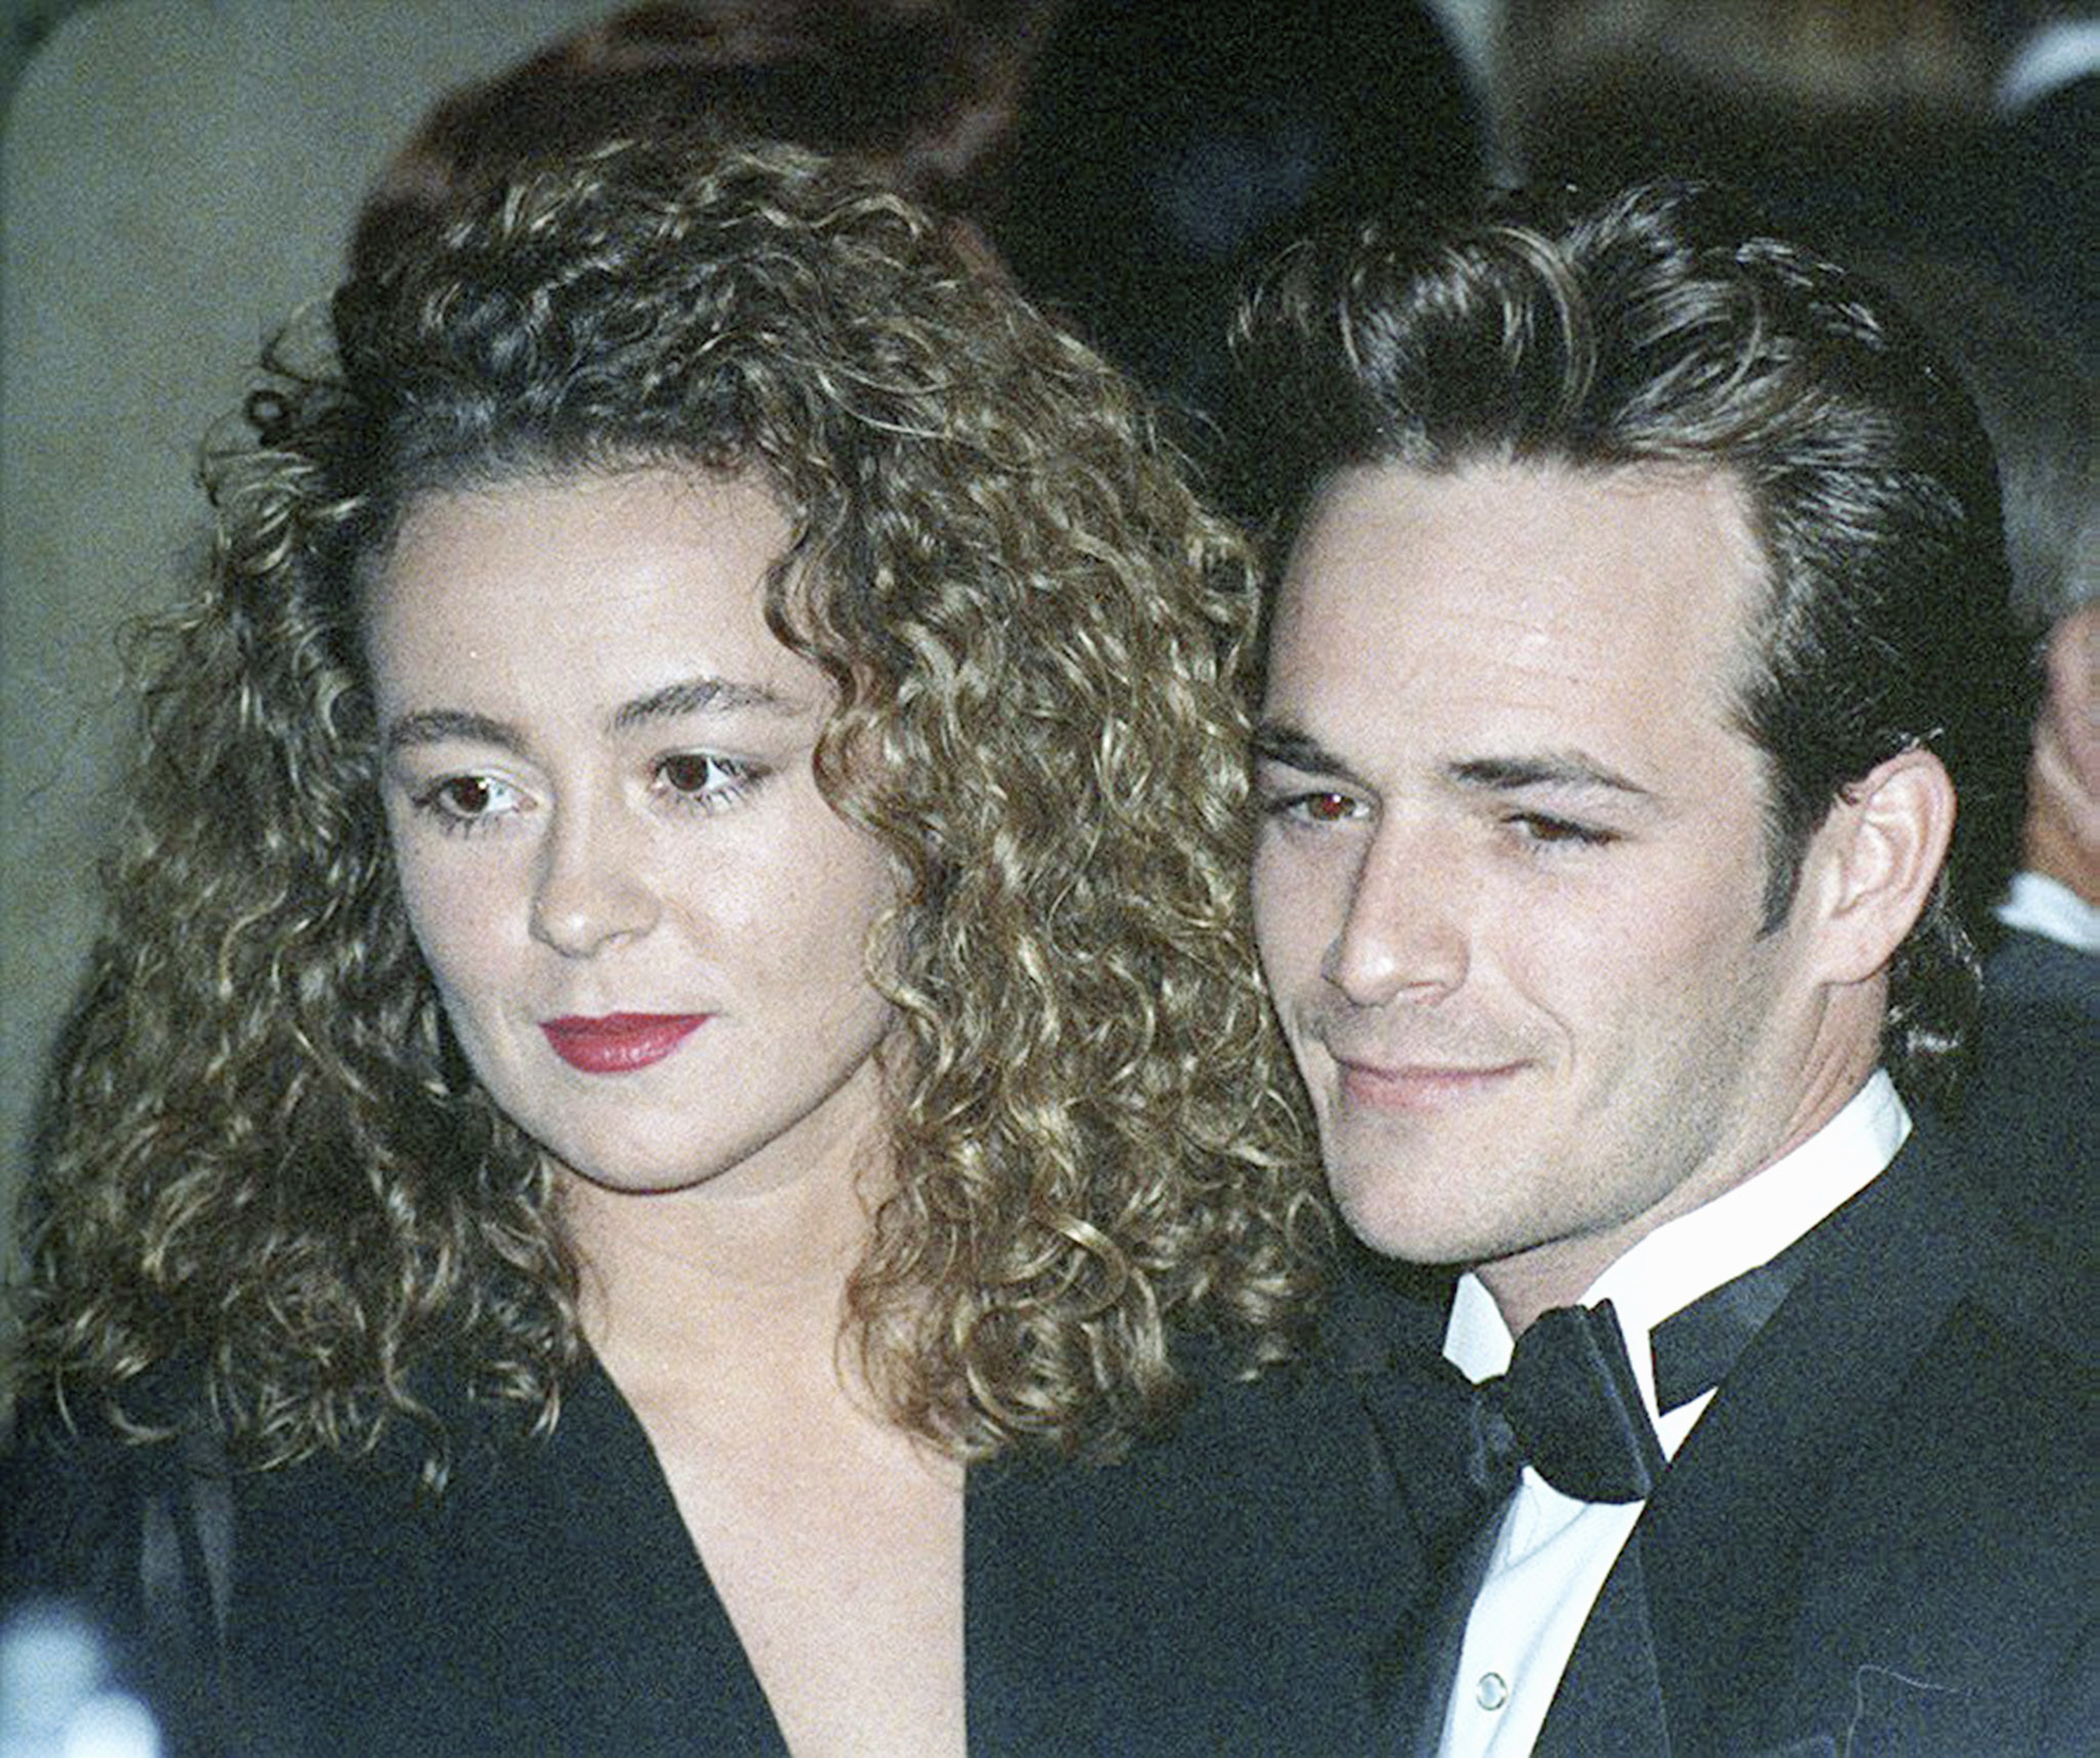 Luke Perry et Rachel Sharp en Californie en 1993 | Source : Getty Images